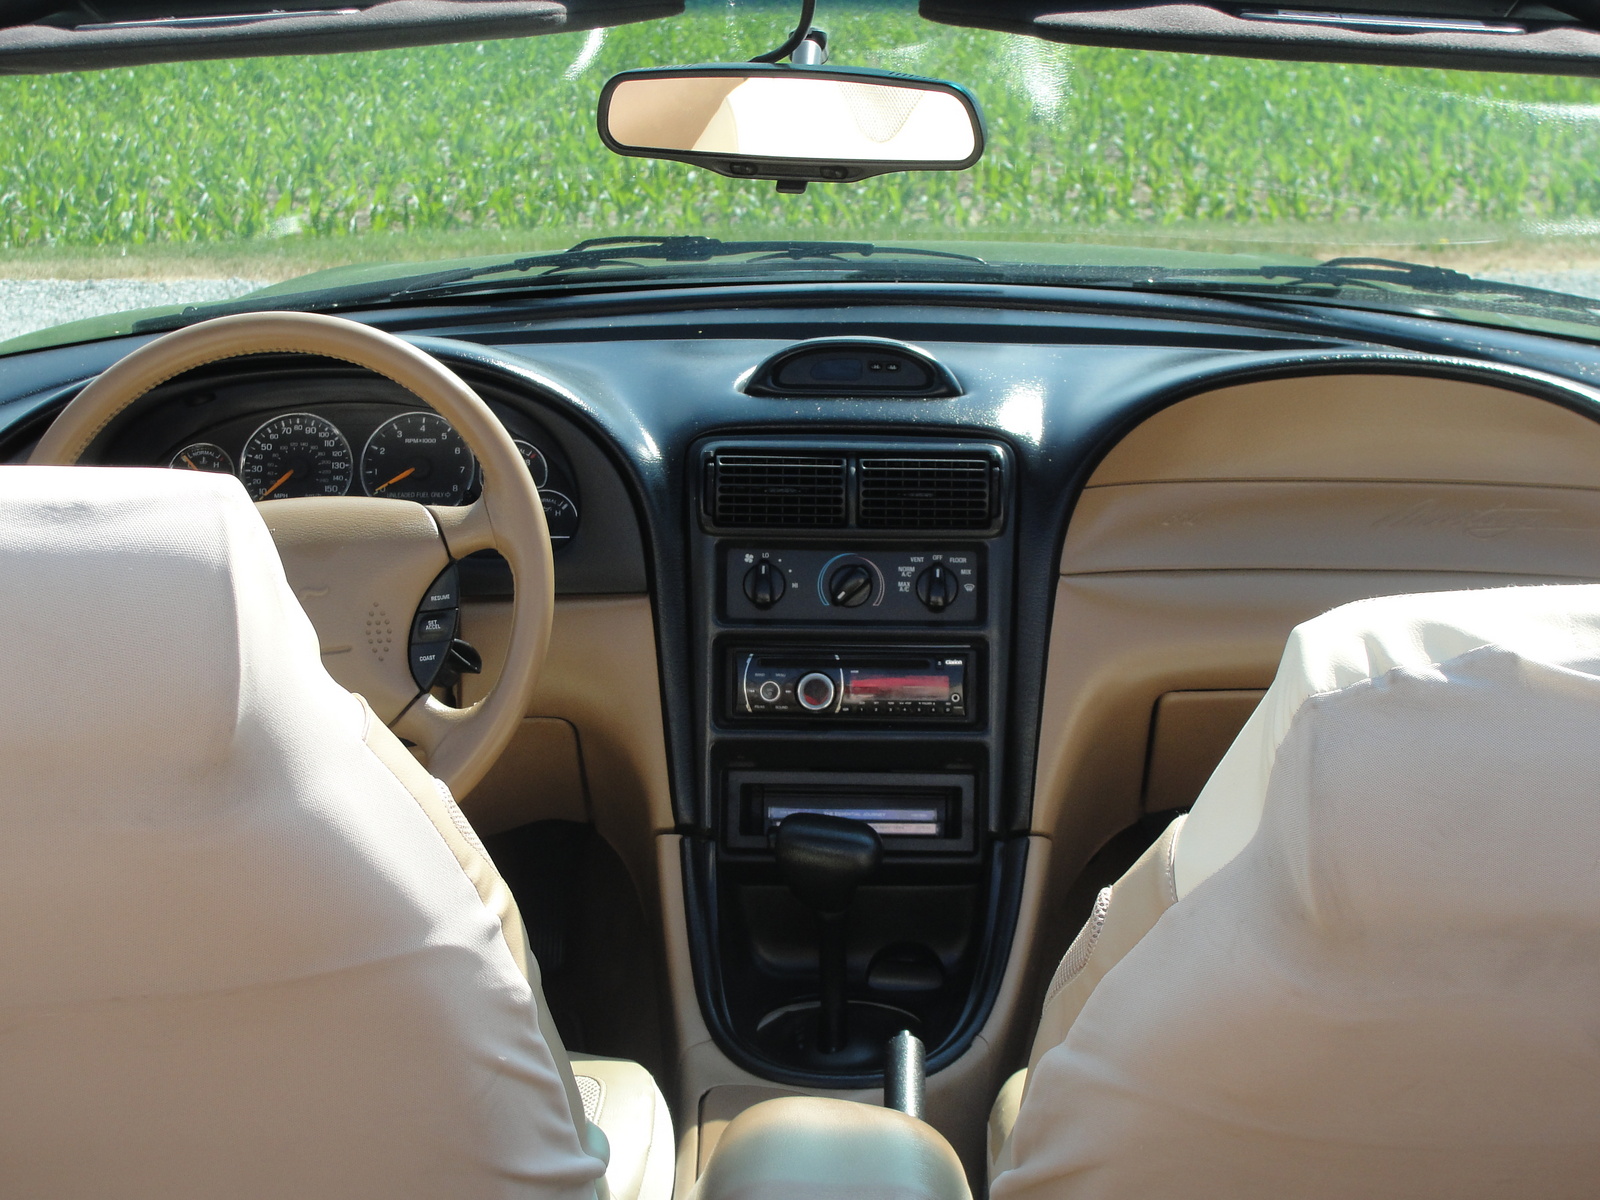 1997 Ford mustang gt interior #9